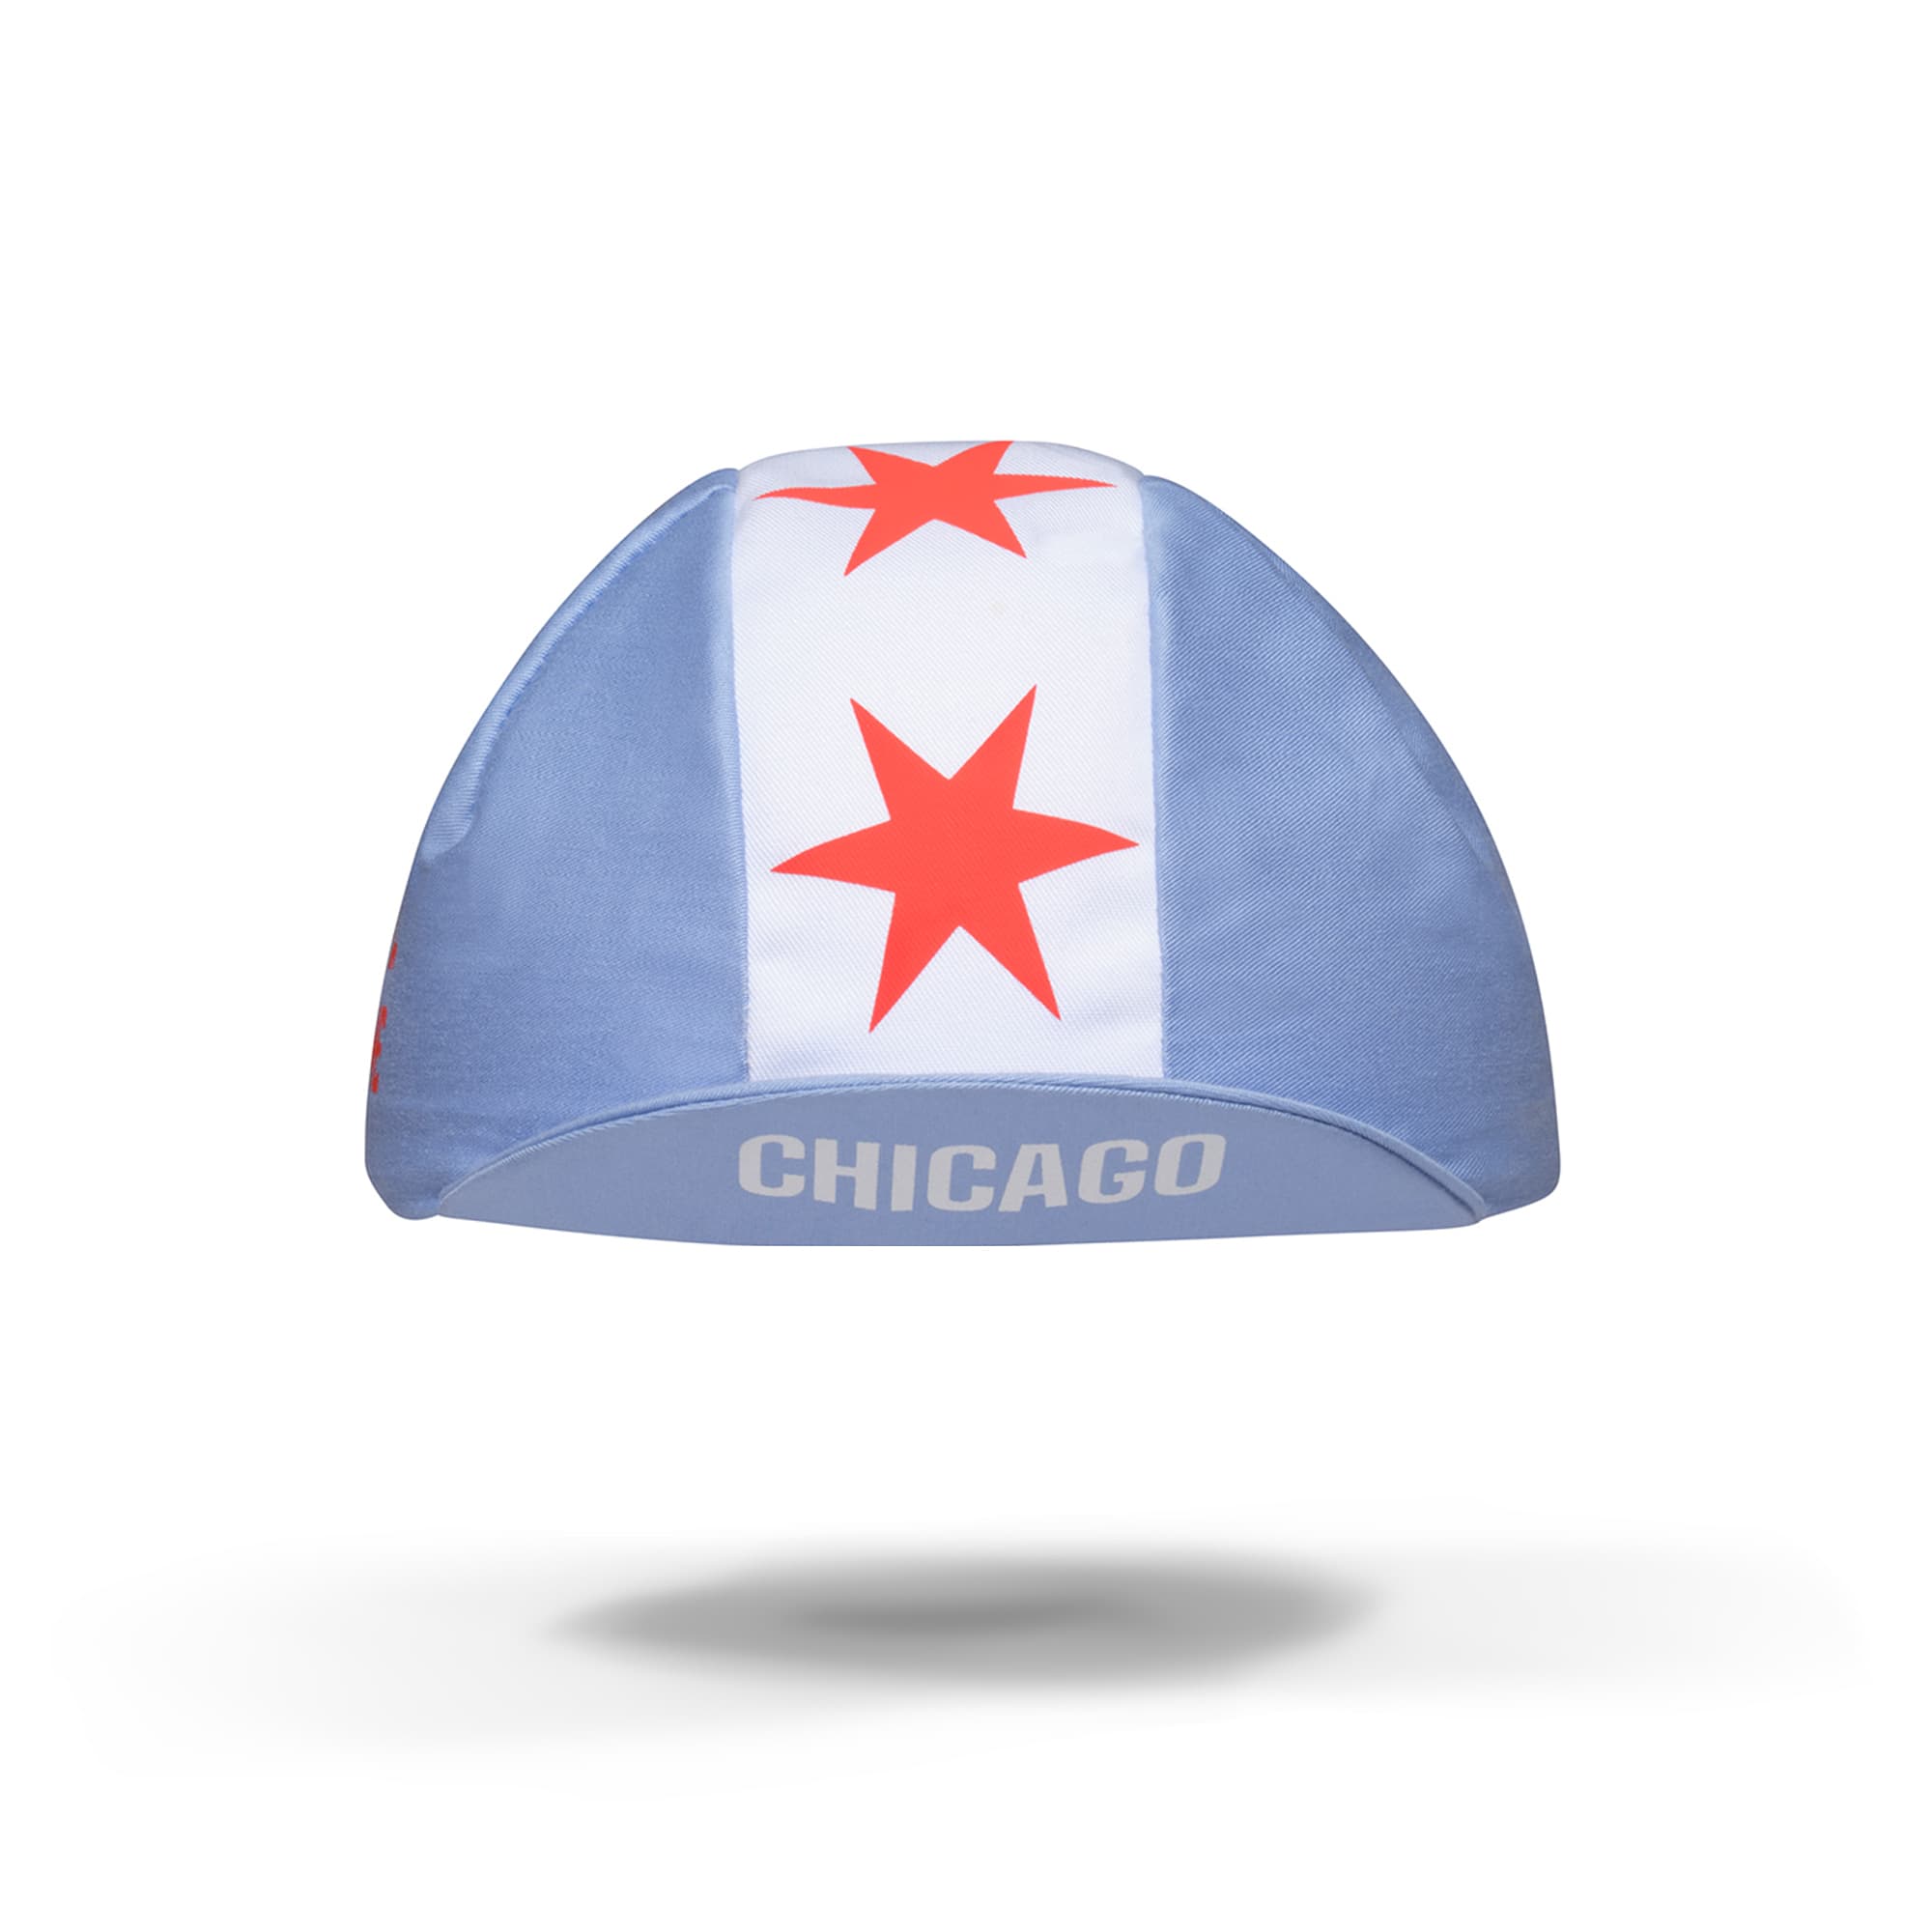 Chrome Chicago Rides Cycling Cap brim view #color_chicago